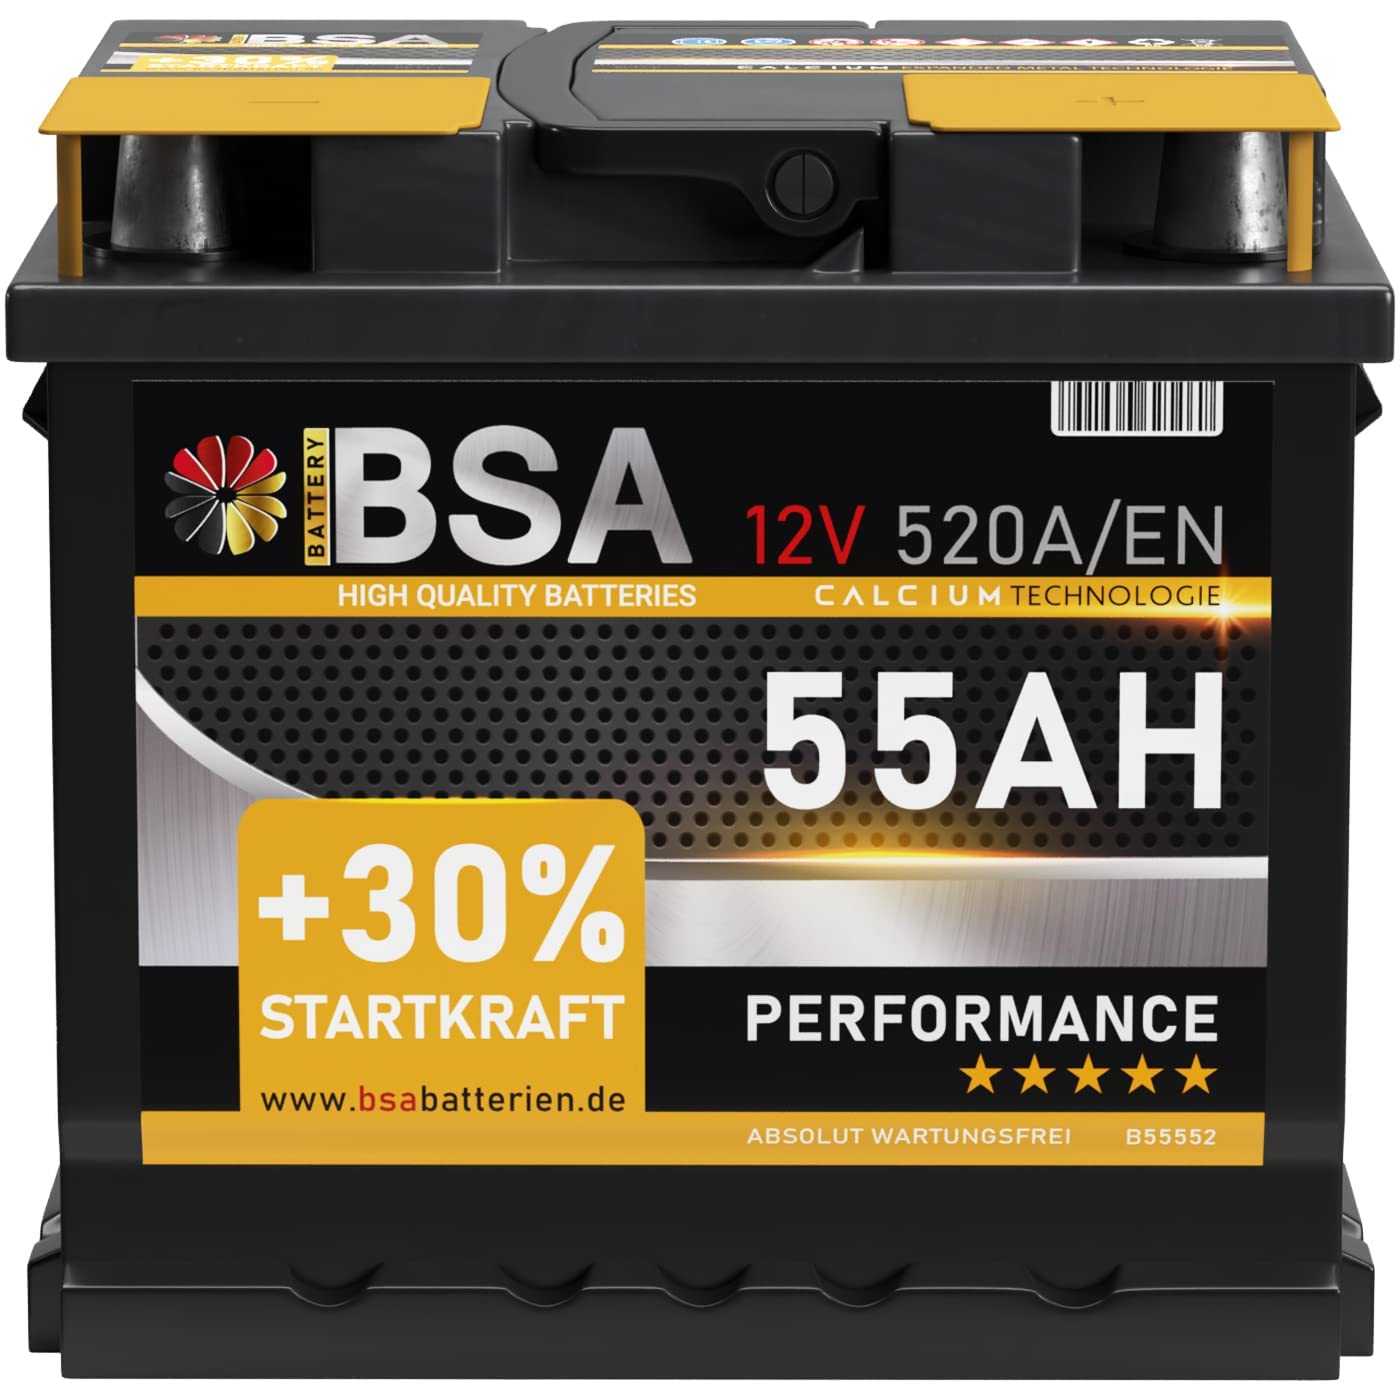 BSA Autobatterie 55Ah 12V Batterie 520A/EN +30% Startleistung ersetzt 44Ah 45AH 50AH 52AH 46AH 55AH 47Ah 53AH von BSA BATTERY HIGH QUALITY BATTERIES